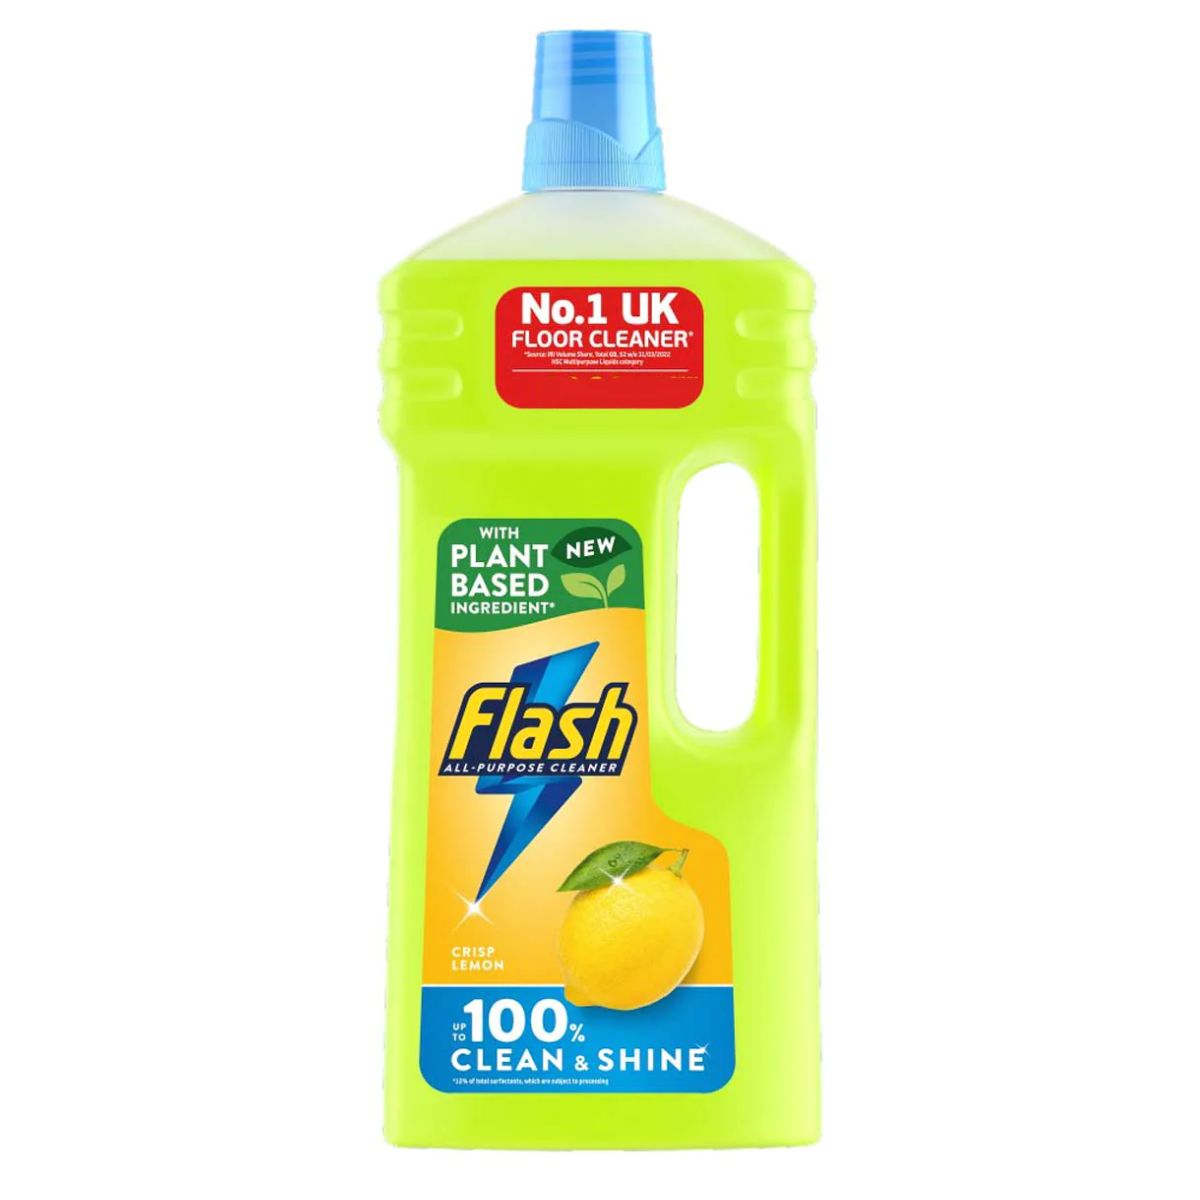 A Flash - Crisp Lemon Multipurpose Liquid Floor Cleaner - 1.2L with plant-based ingredients.